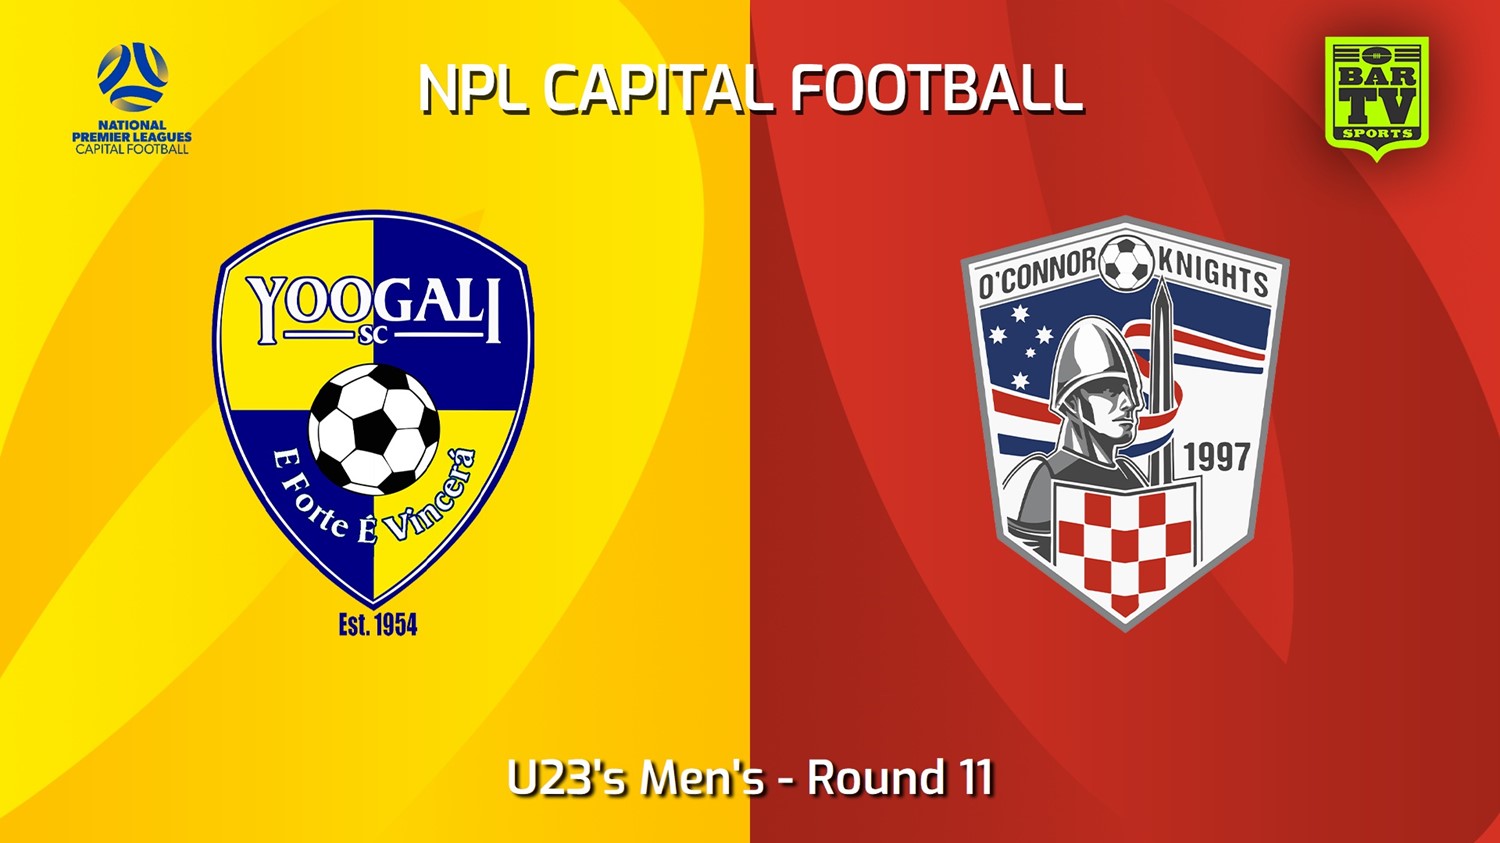 240616-video-Capital NPL U23 Round 11 - Yoogali SC U23 v O'Connor Knights SC U23 Slate Image